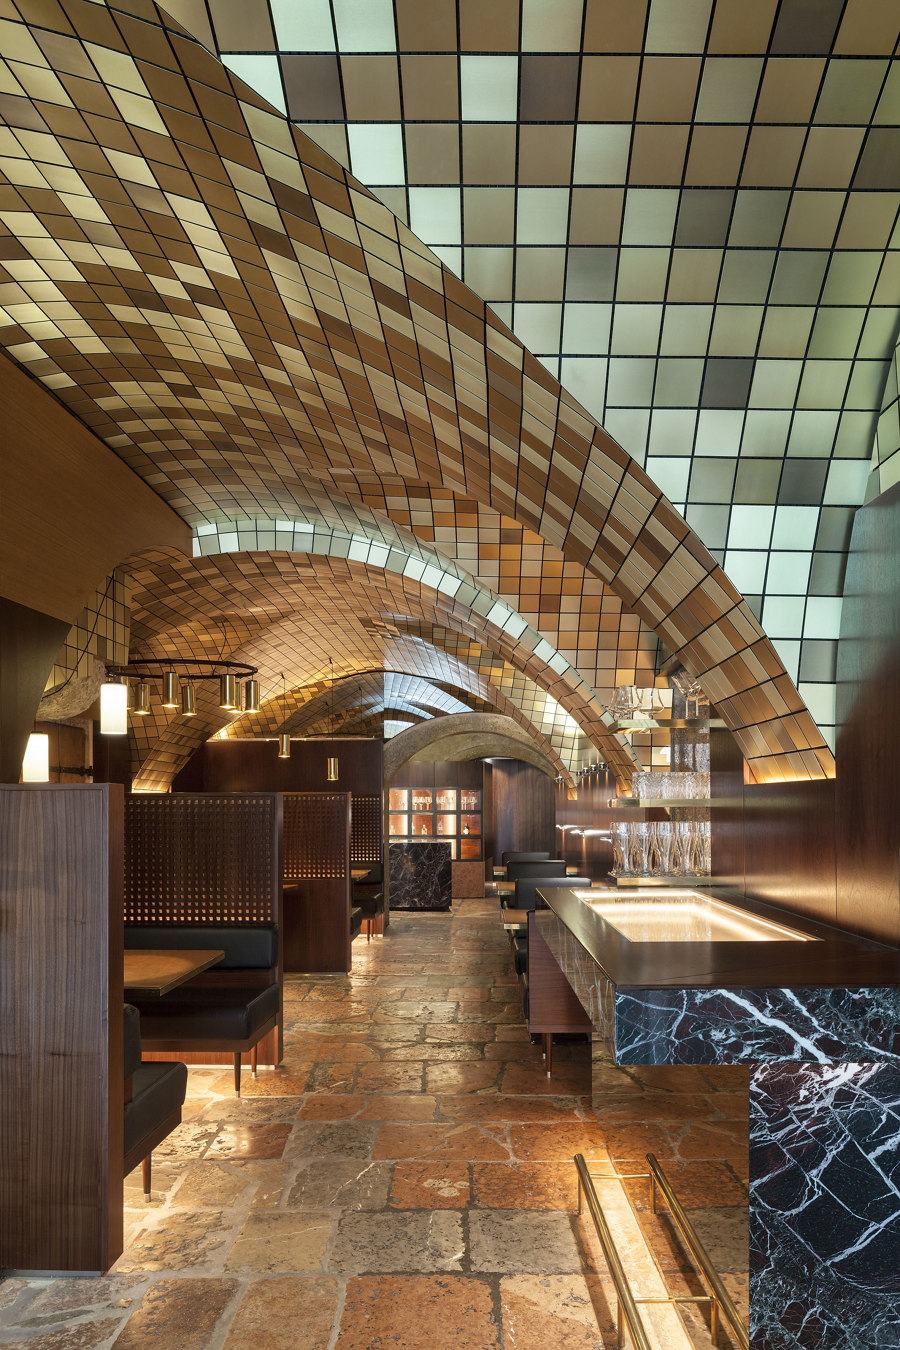 Koller + Koller am Waagplatz Restaurant by BEHF Architects | Restaurant interiors